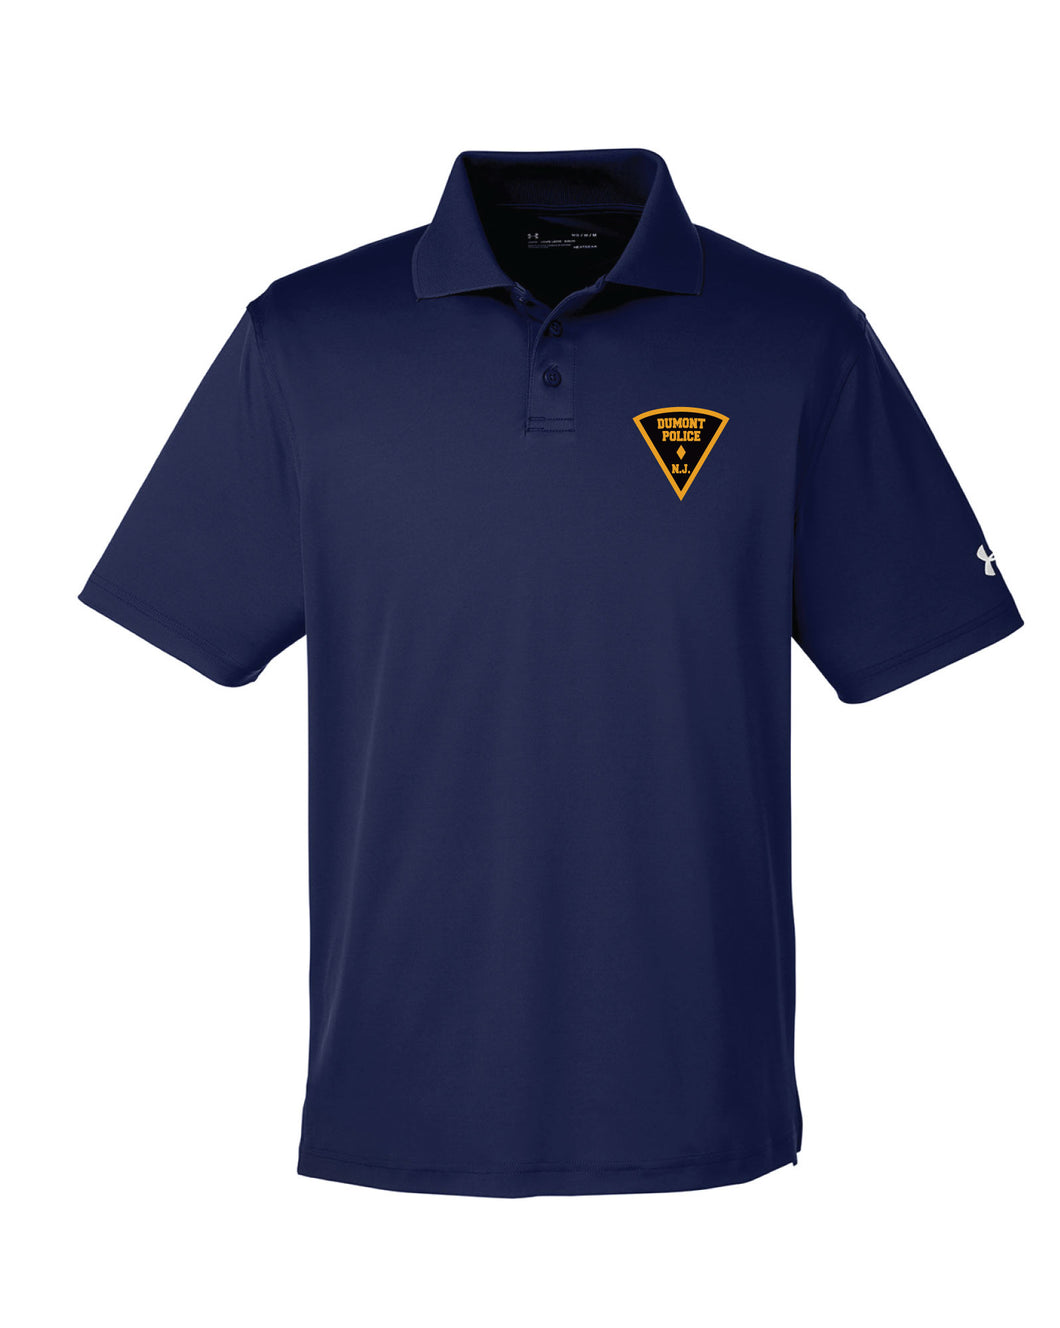 Dumont Police Under Armour Polo Shirt - Navy (Design 2) - 5KounT